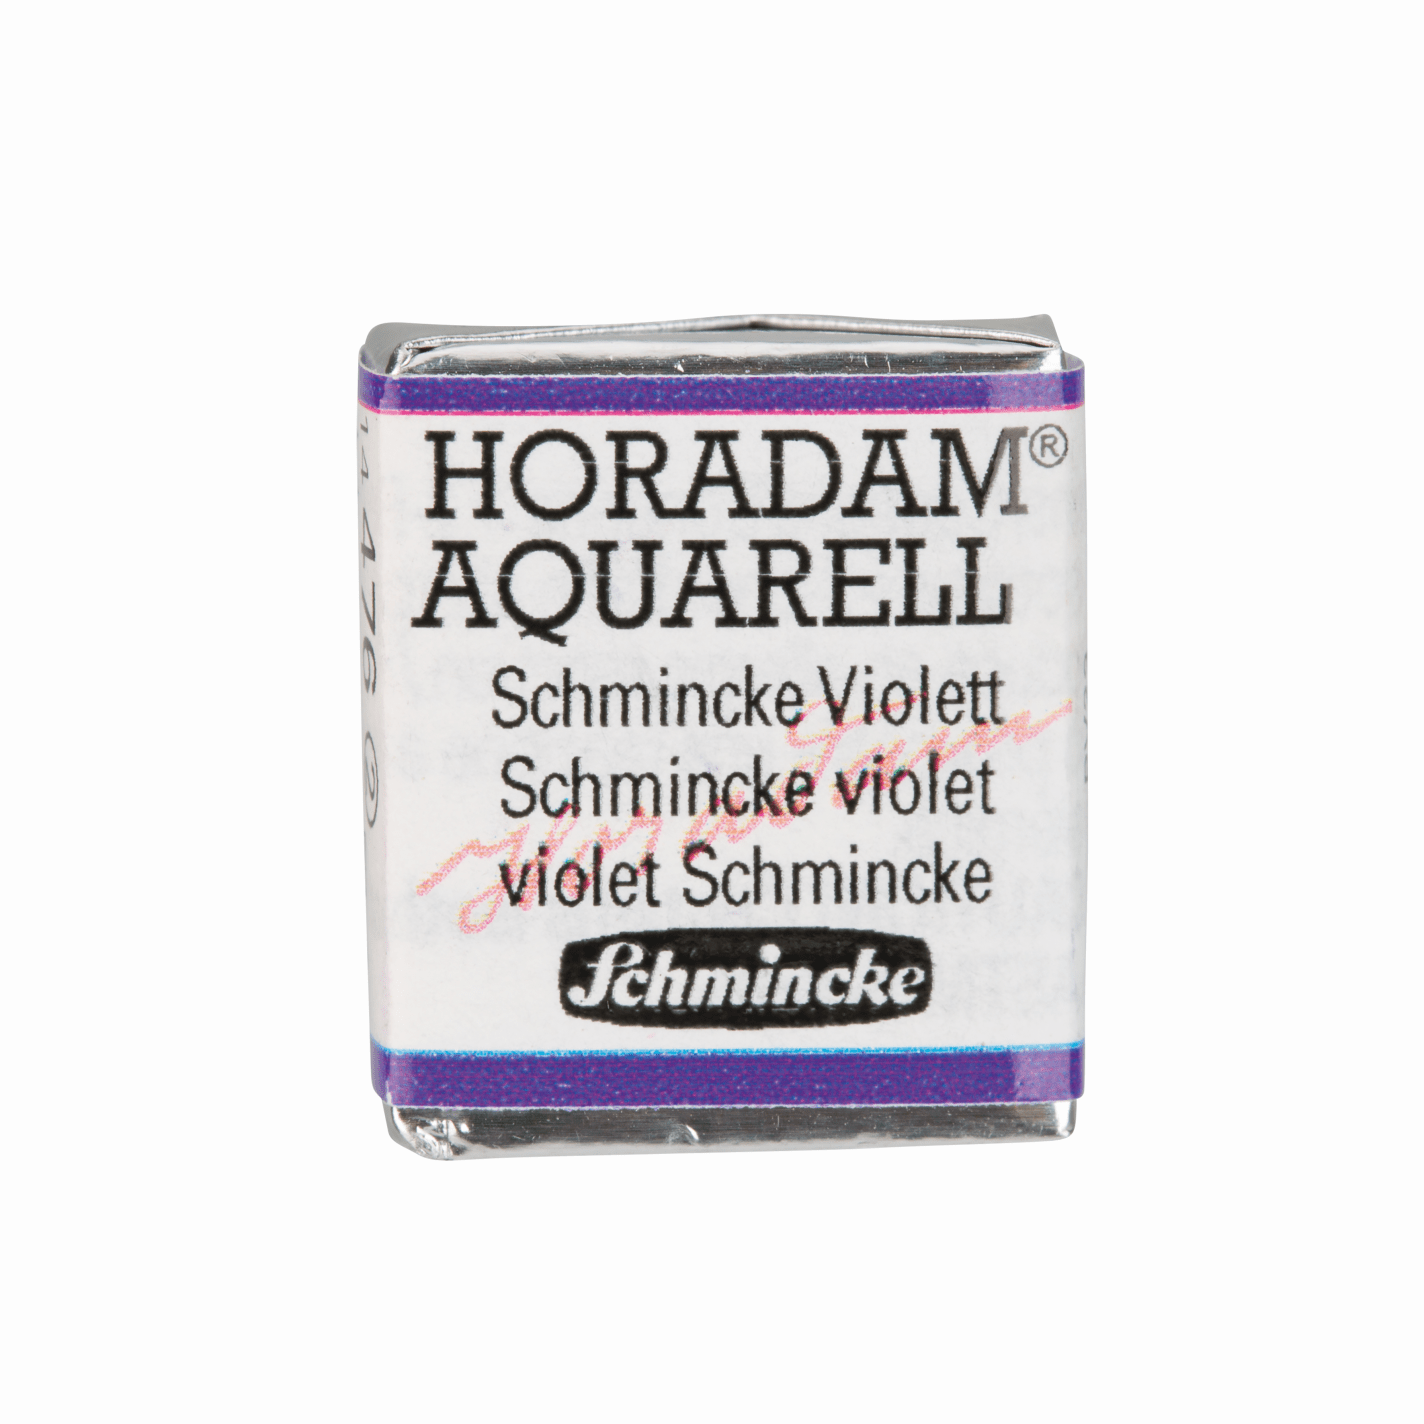 Schmincke Horadam Aquarell pans 1/2 pan Schmincke Violet